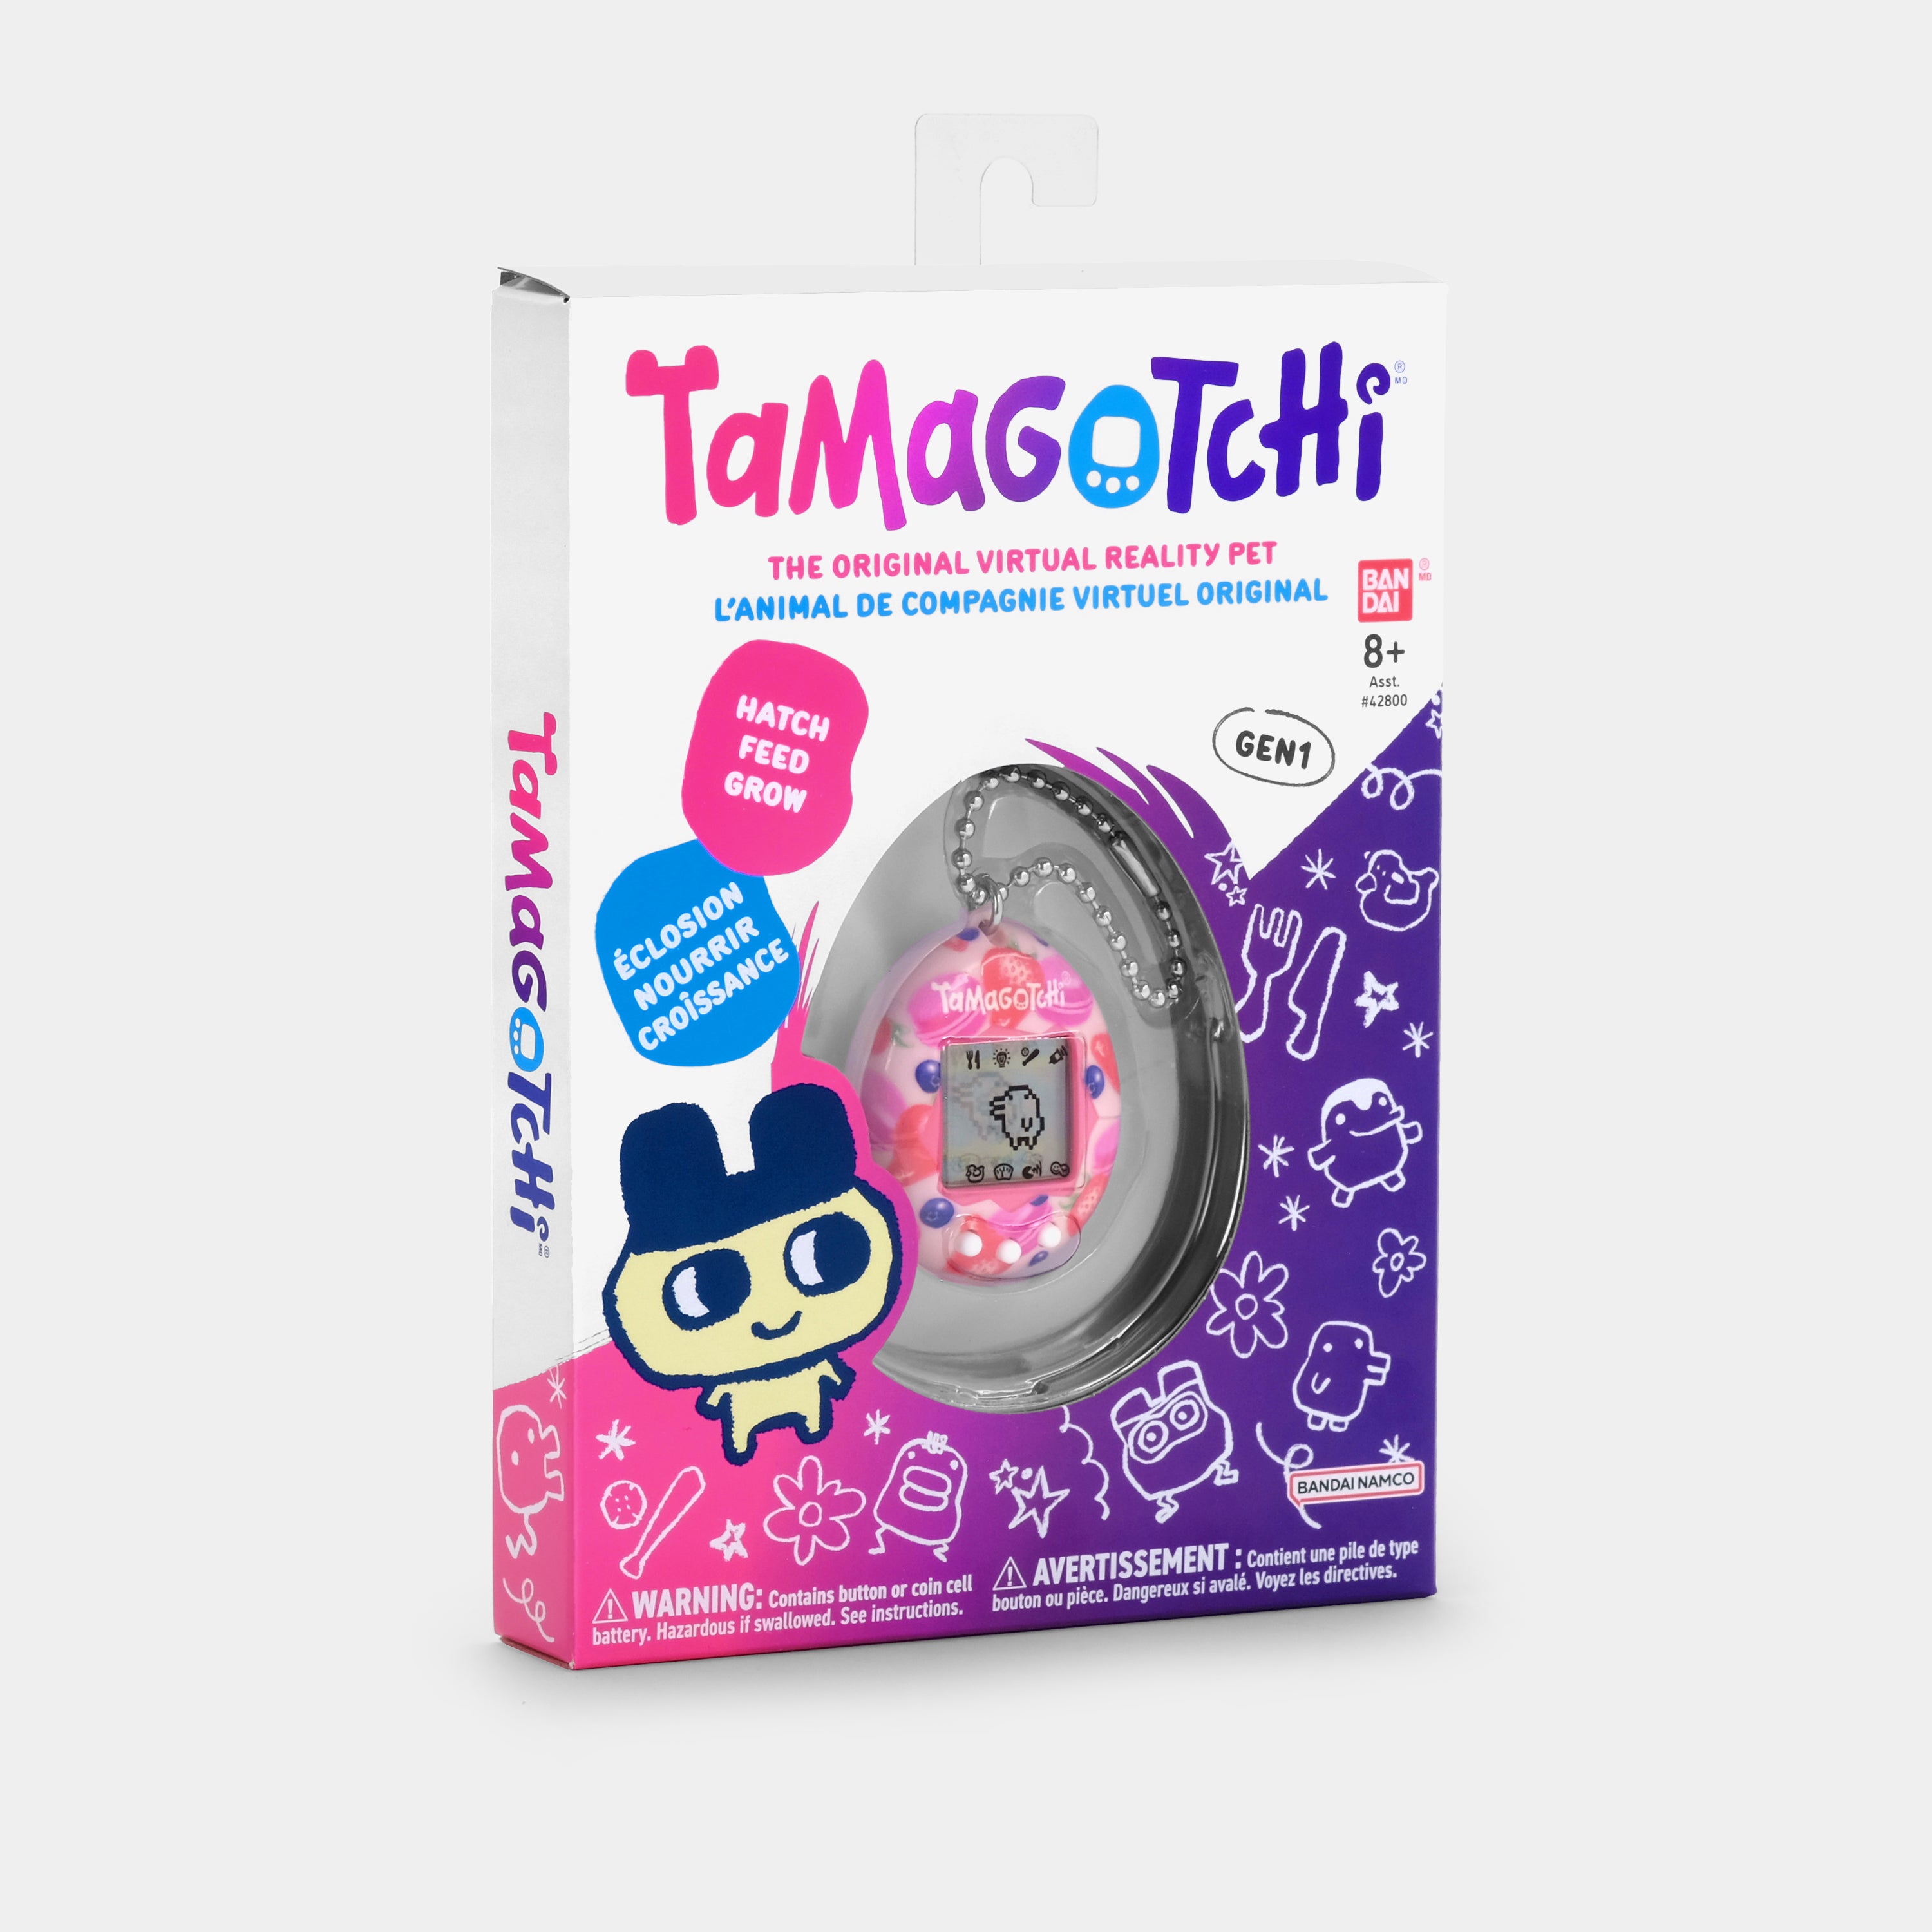 Tamagotchi Original Bandai Gen Mascota Virtual